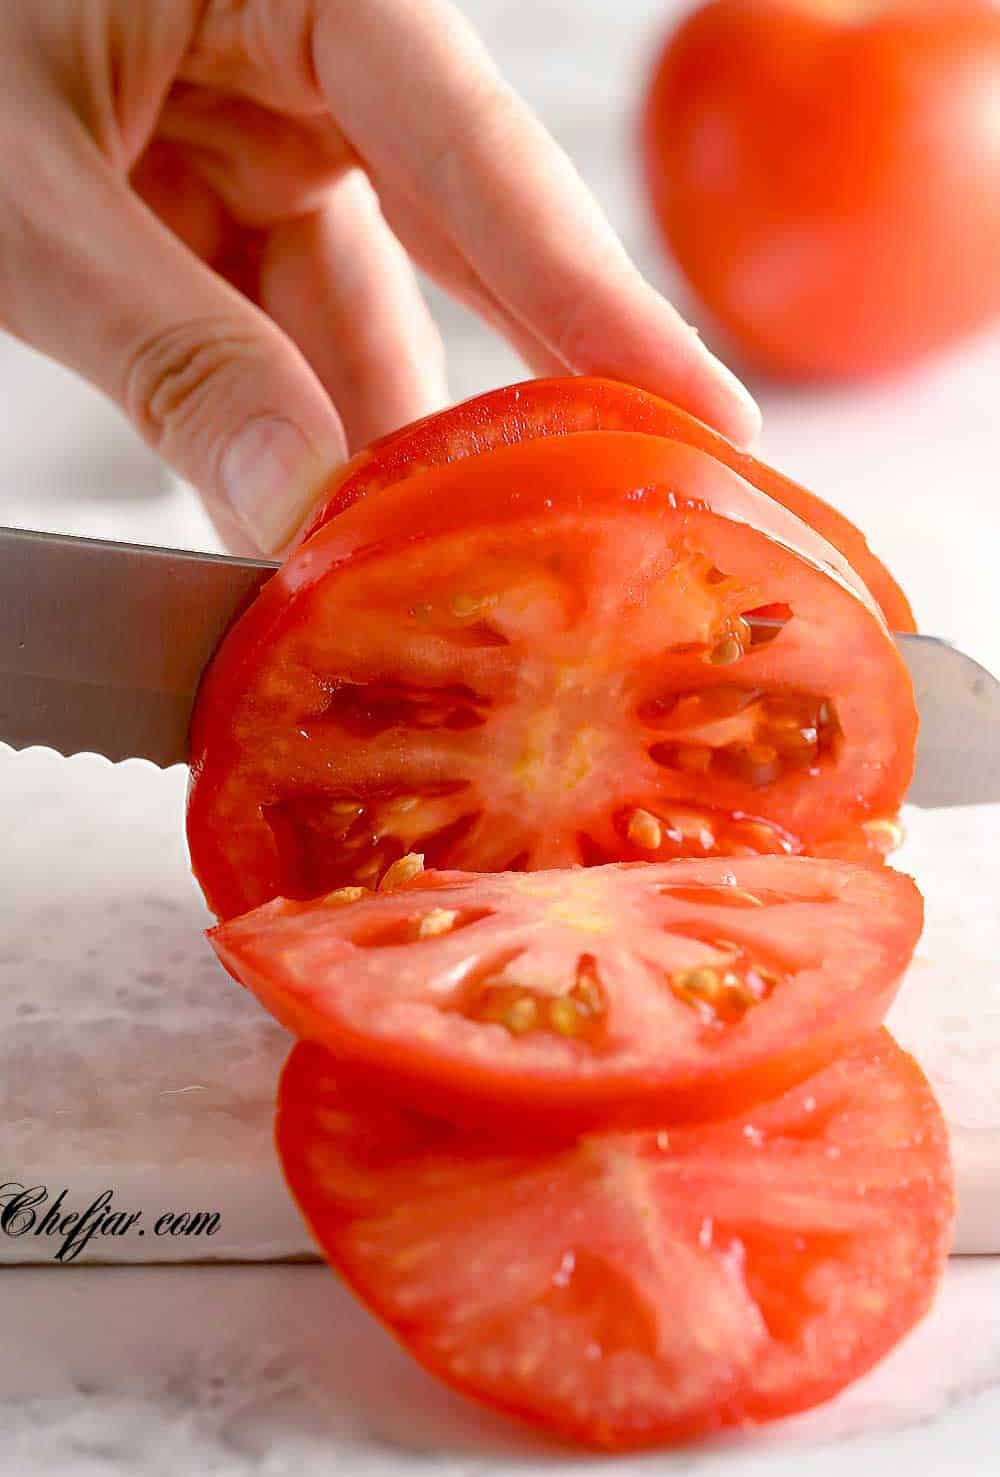 knife cutting through a tomato